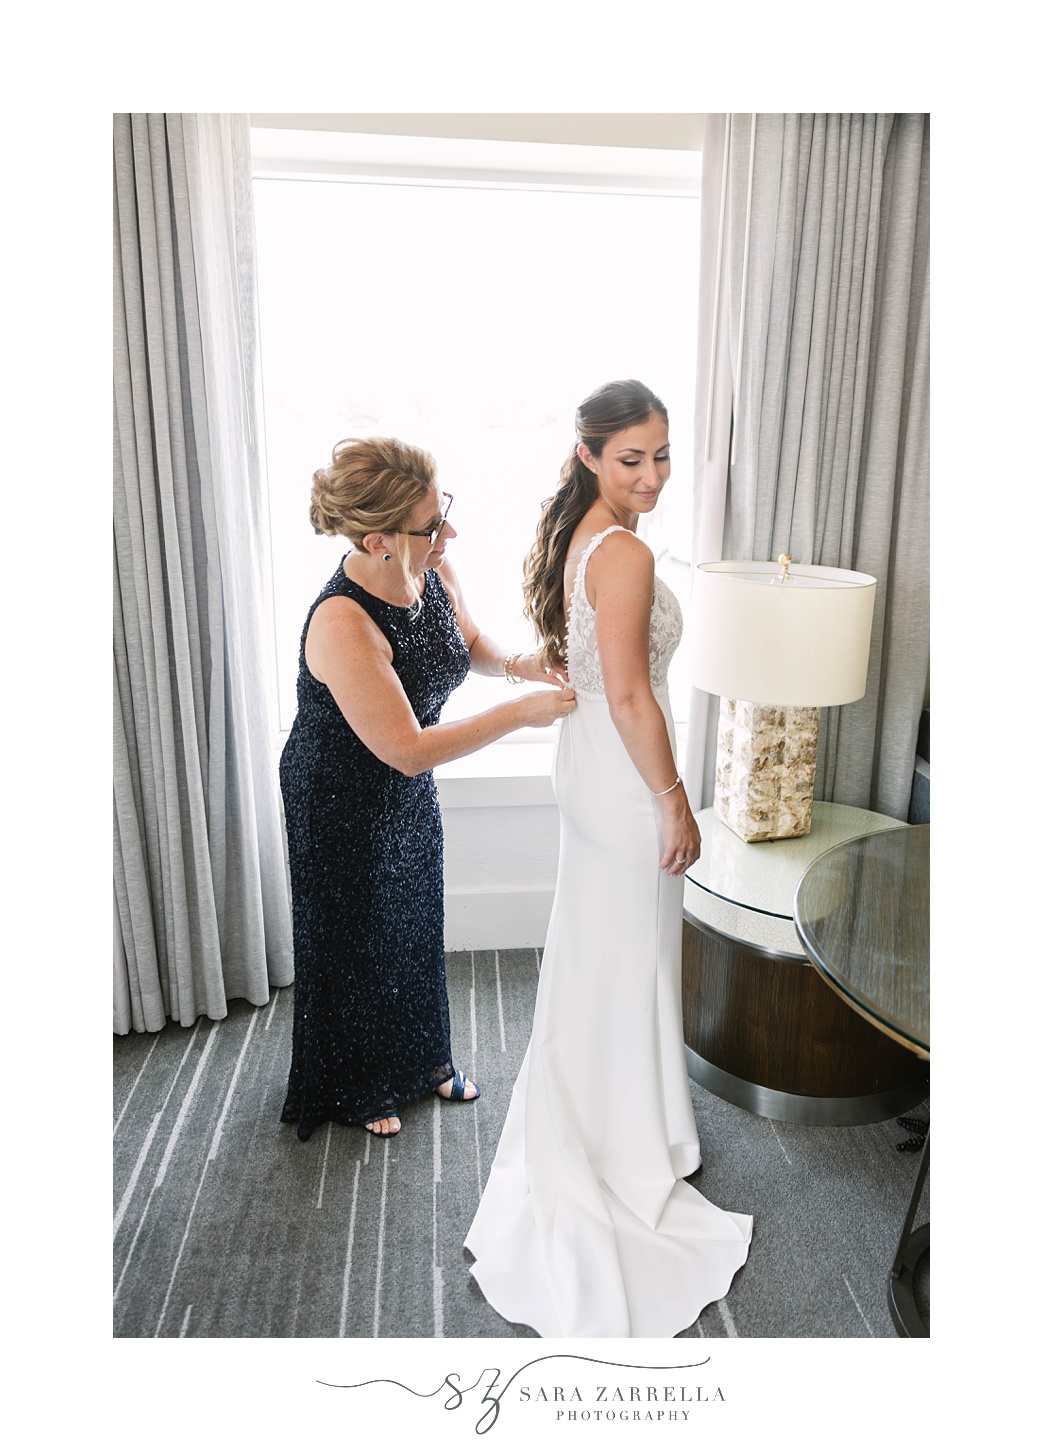 mother helps bride with wedding gown before Gurney’s Newport Resort wedding day